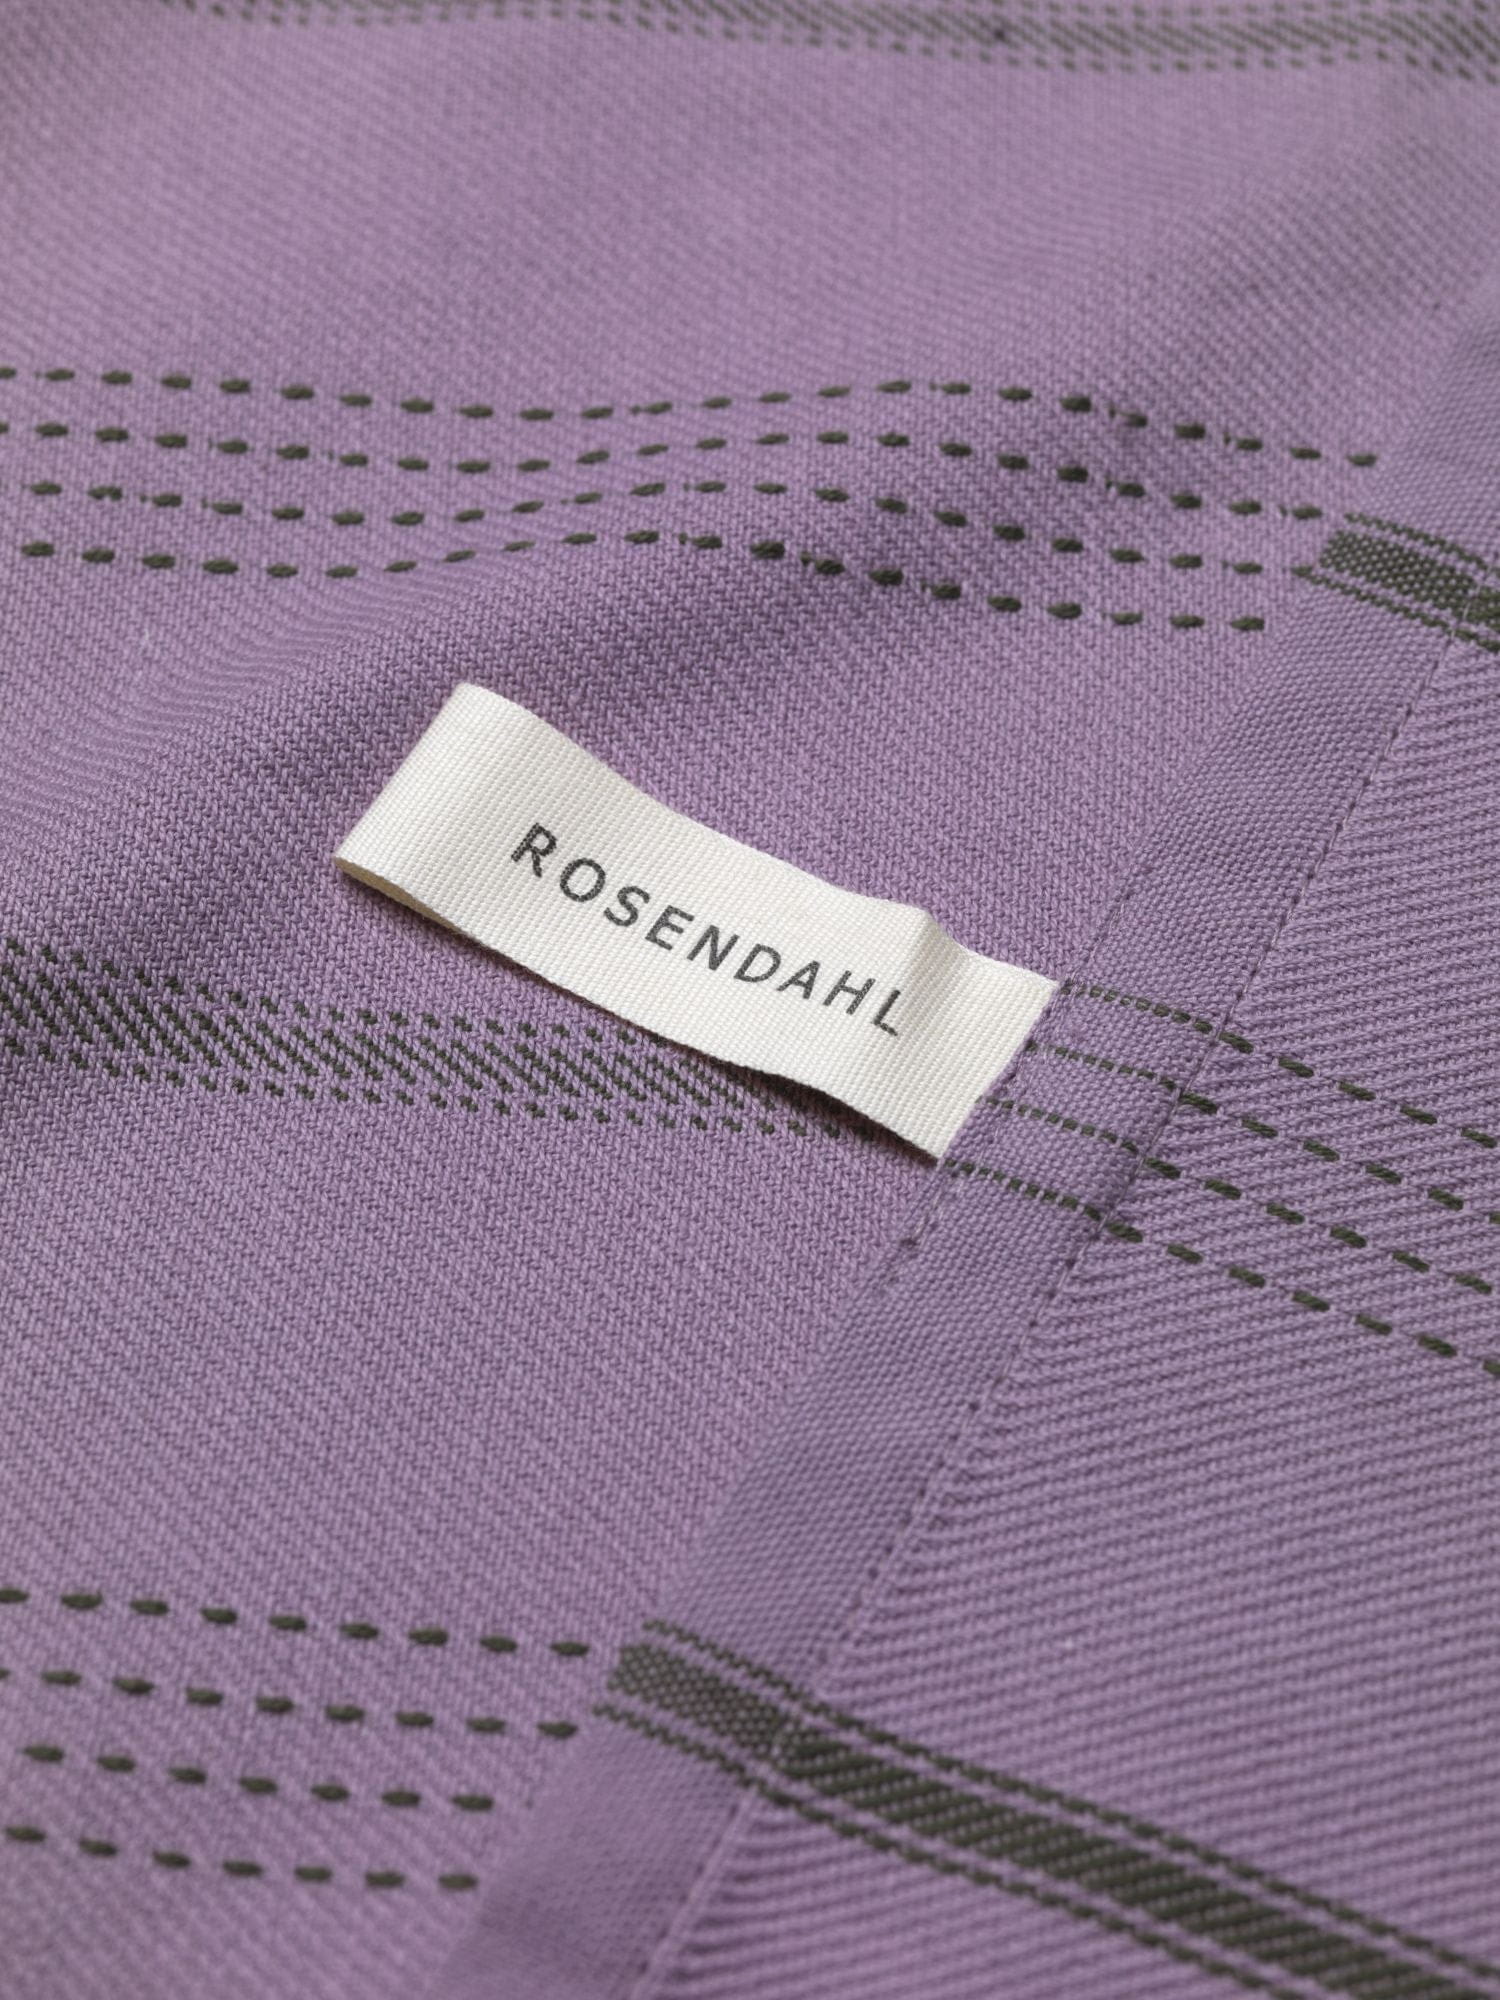 Rosendahl Rosendahl Textiler beta torka framgång 50x70 cm, lavendel